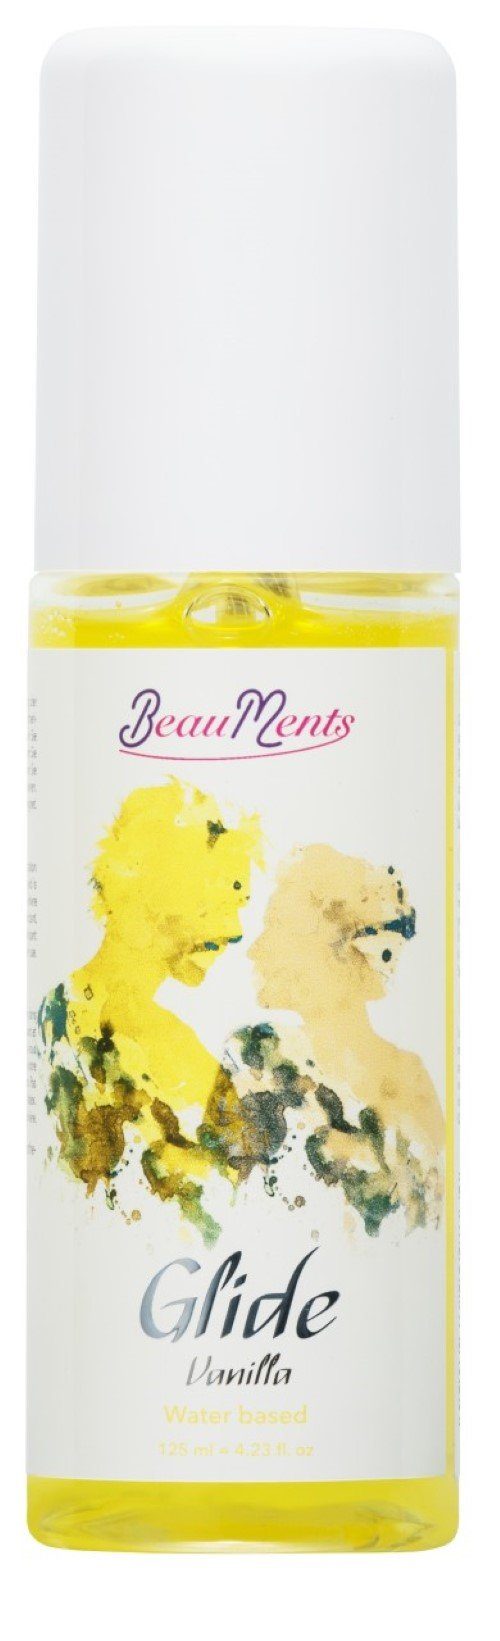 Beauments BeauMents Vanilla based) ml (water Gleitgel ml Glide - 125 125